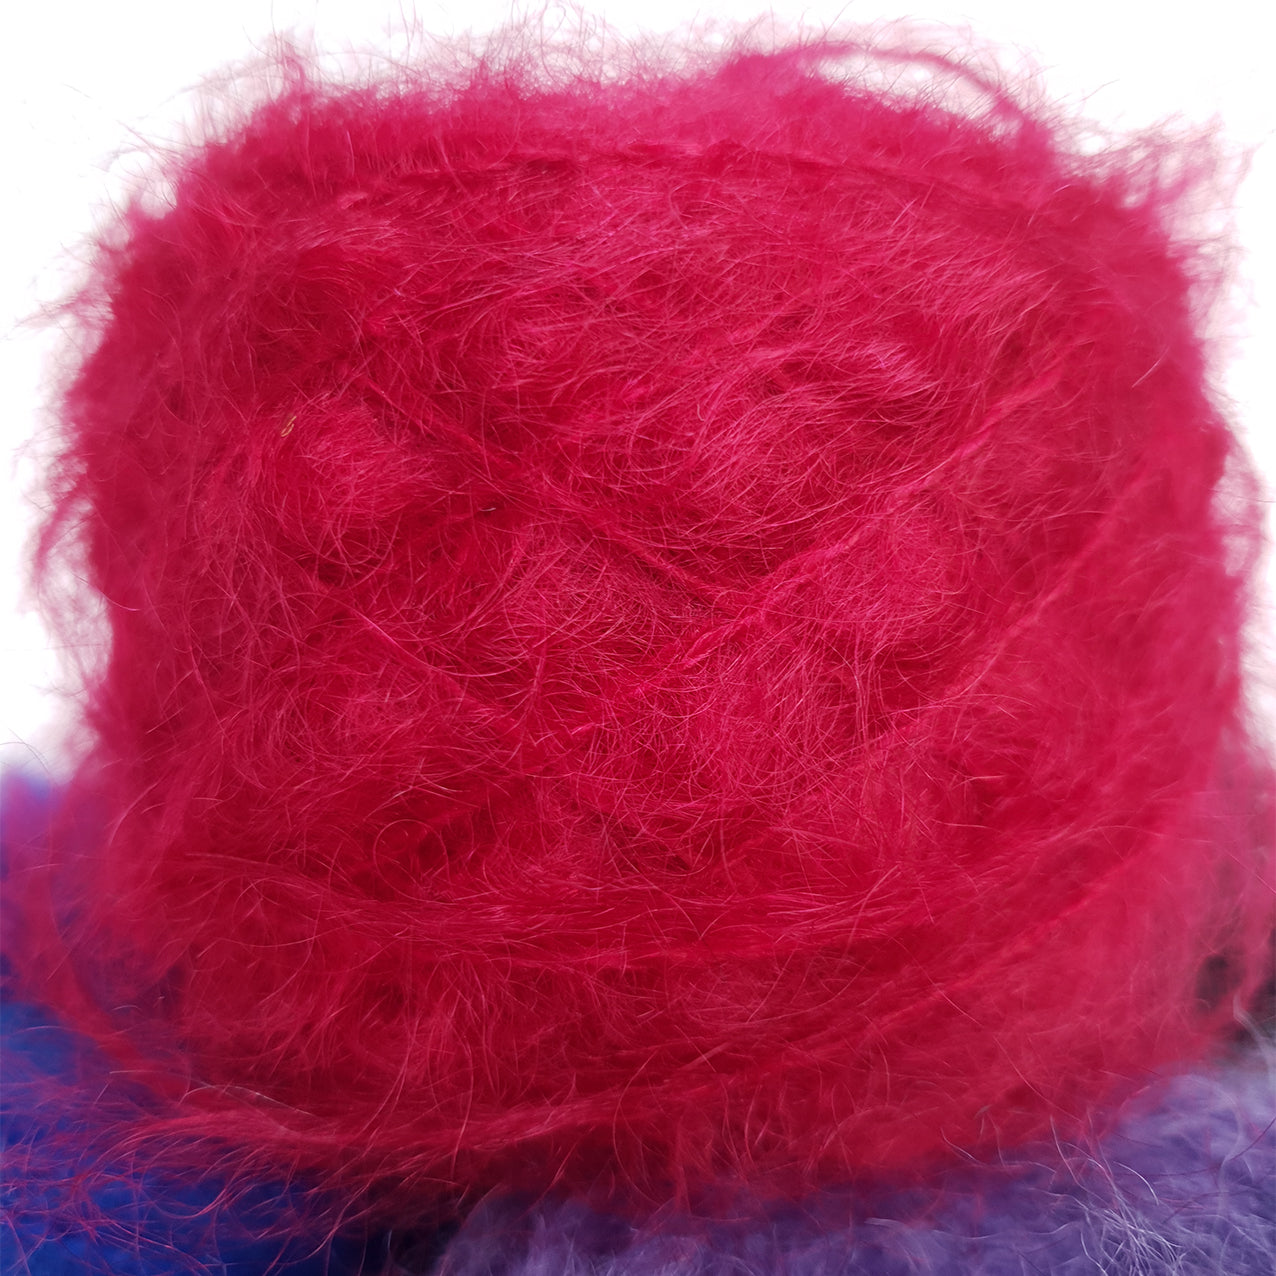 Brushed Mohair Yarn, Cherry, 50g Ball